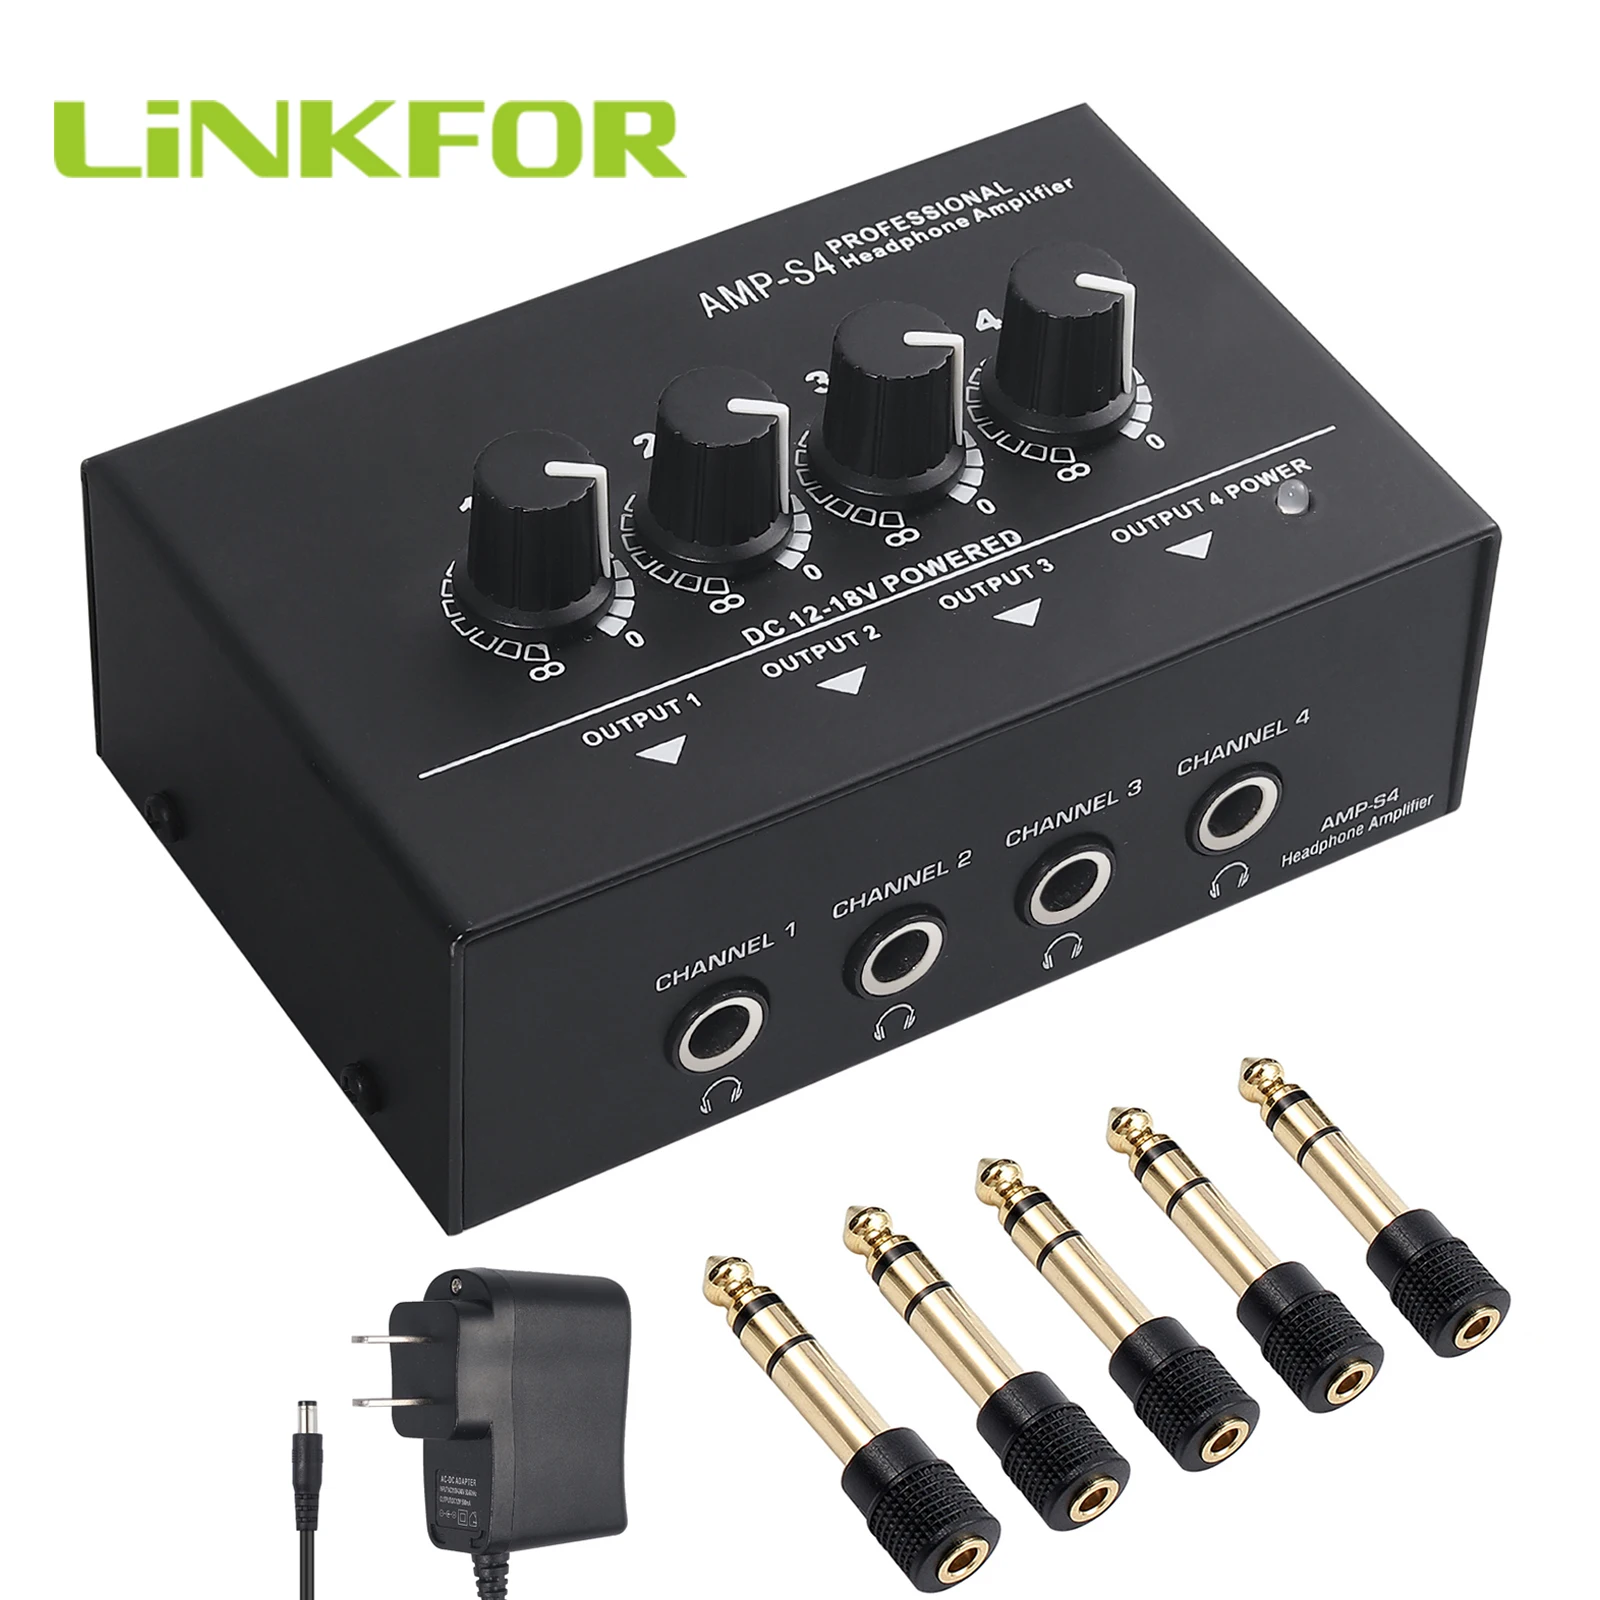 

LiNKFOR 4 Channel Headphone Amplifier Earphone Splitter Amp TRS Headphones Output Jack TRS Audio Input 6.35mm to 3.5mm adapters